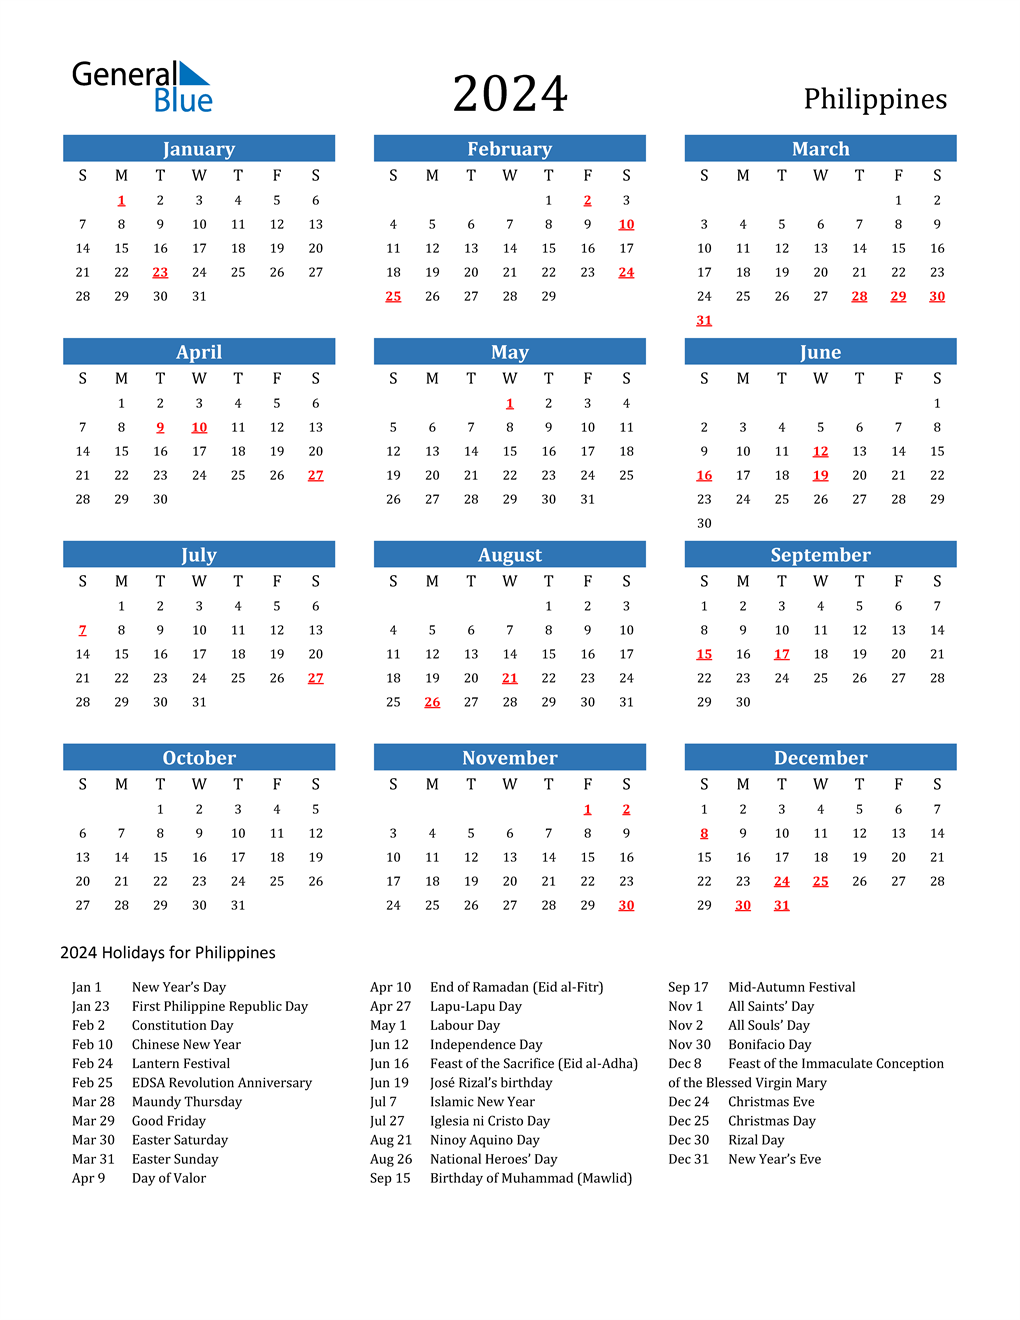 Pnc Holiday Calendar 2024 Olympics Kipp Seline